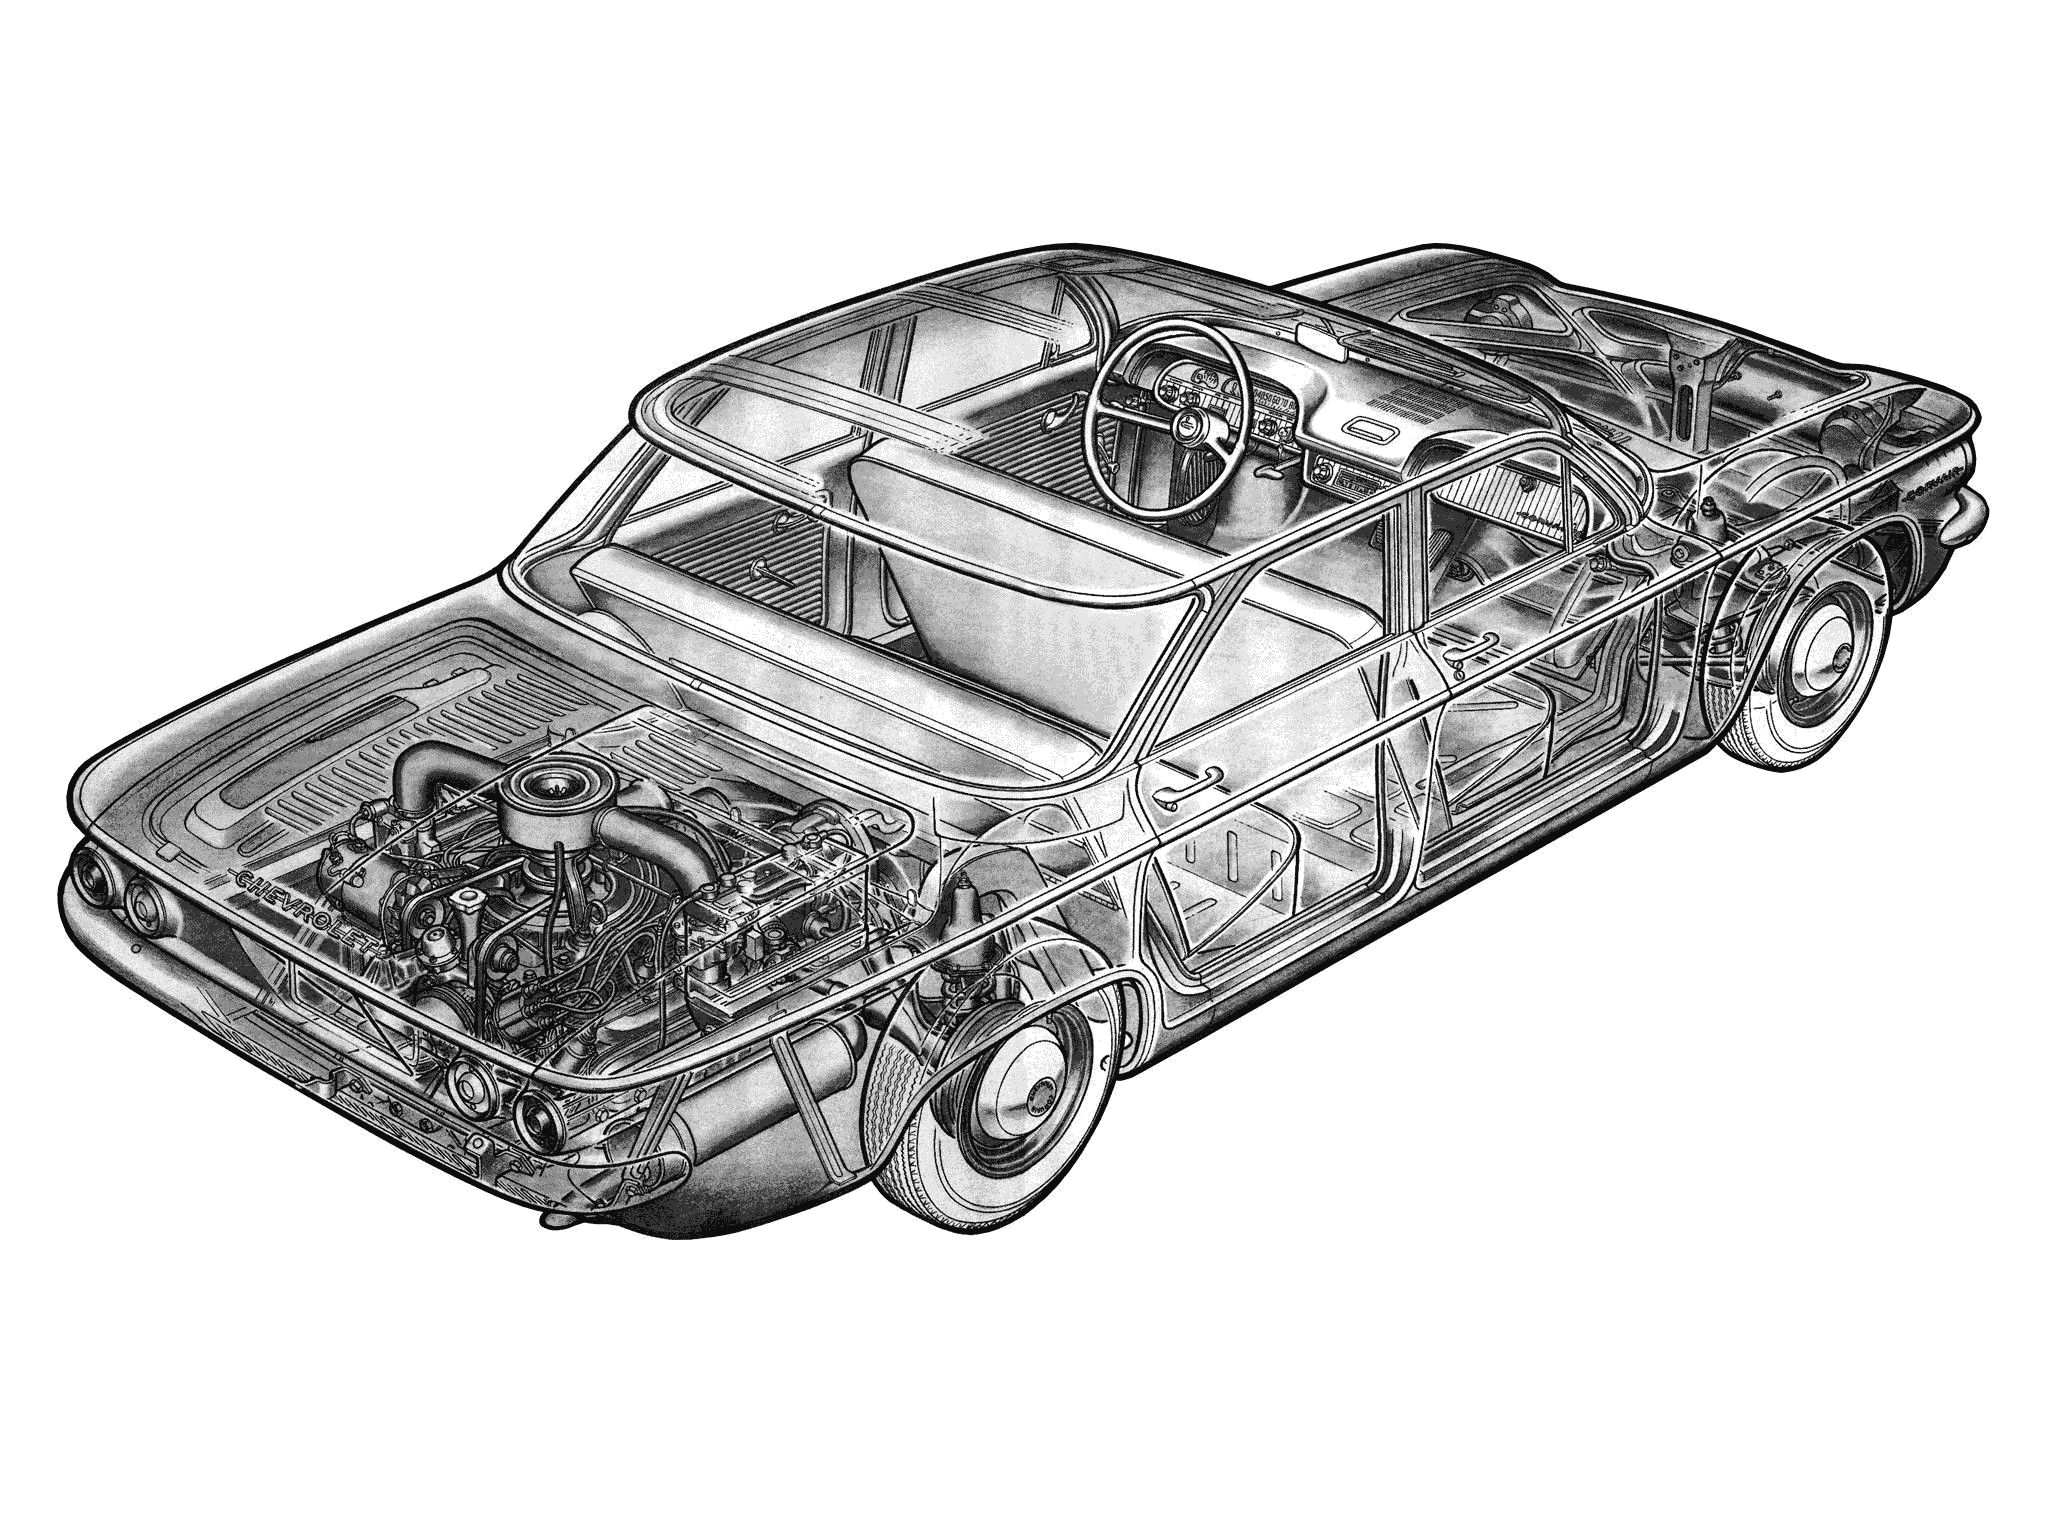 Chevrolet Corvair cutaway drawing